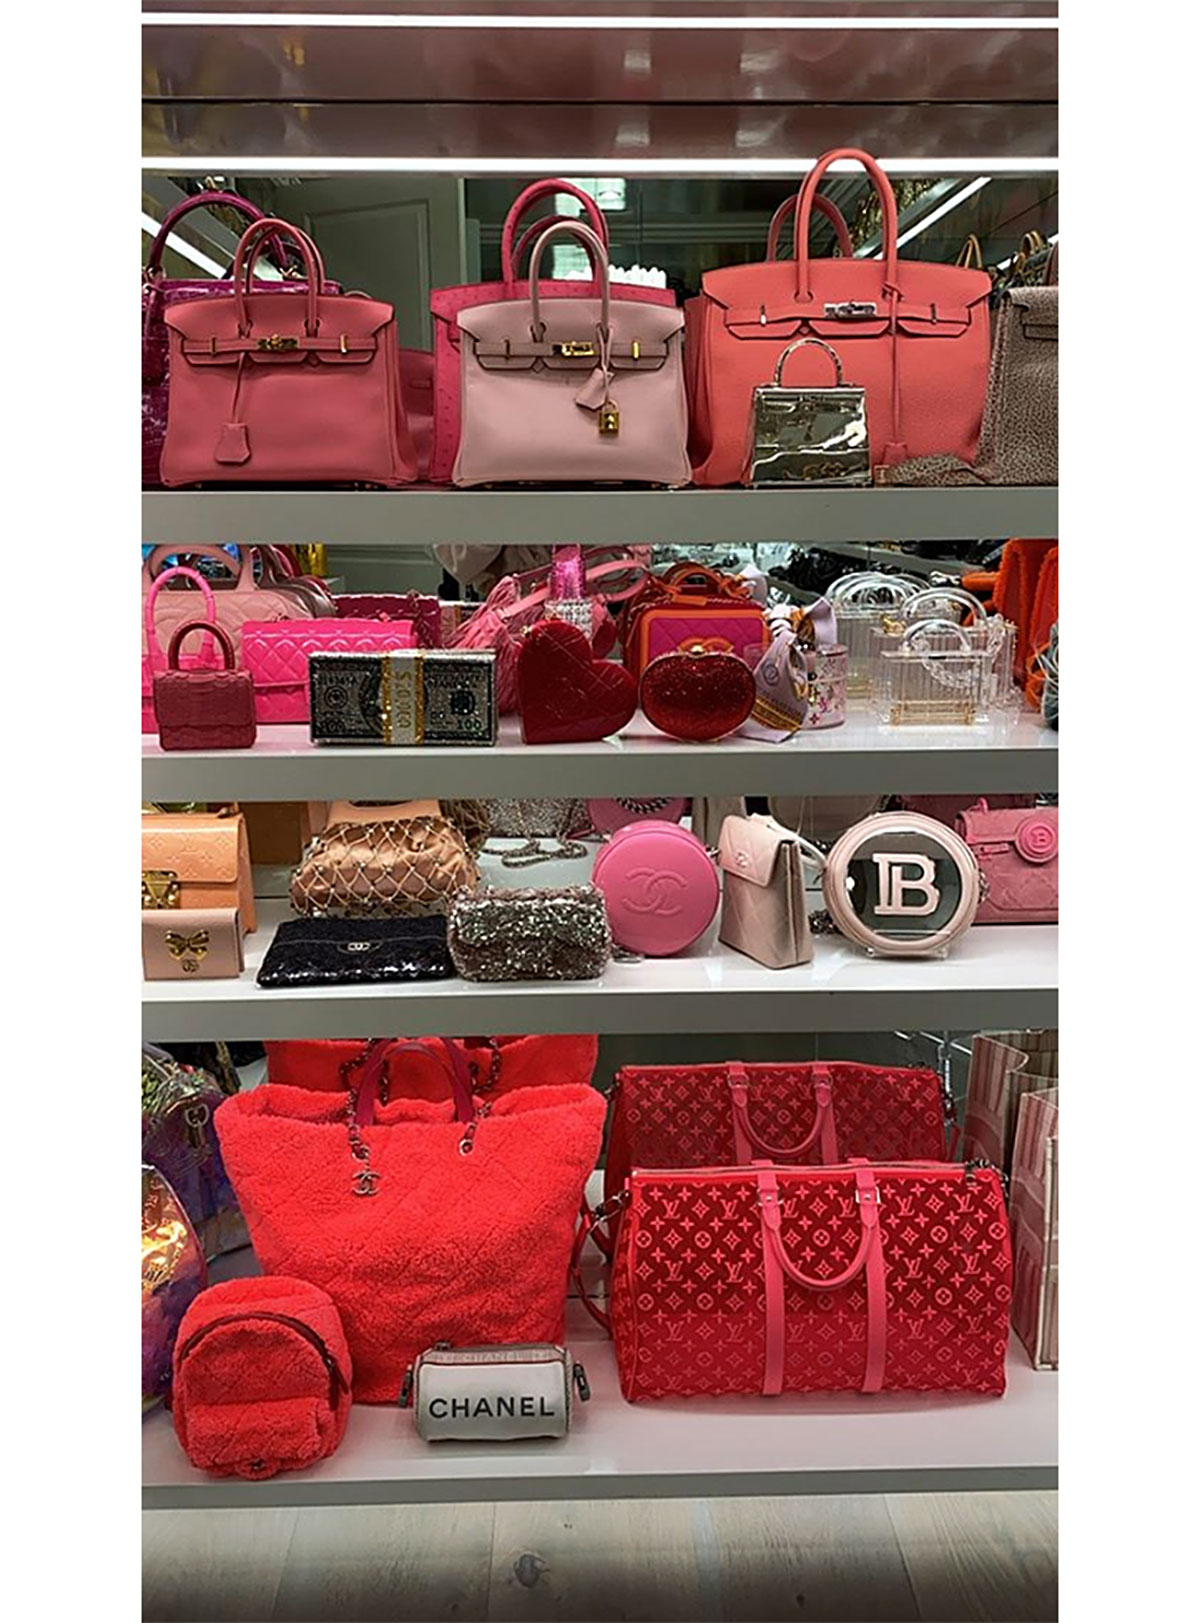 Kylie Jenner Gives Tour of Designer Handbag, Purse Closet: Pics | Us Weekly